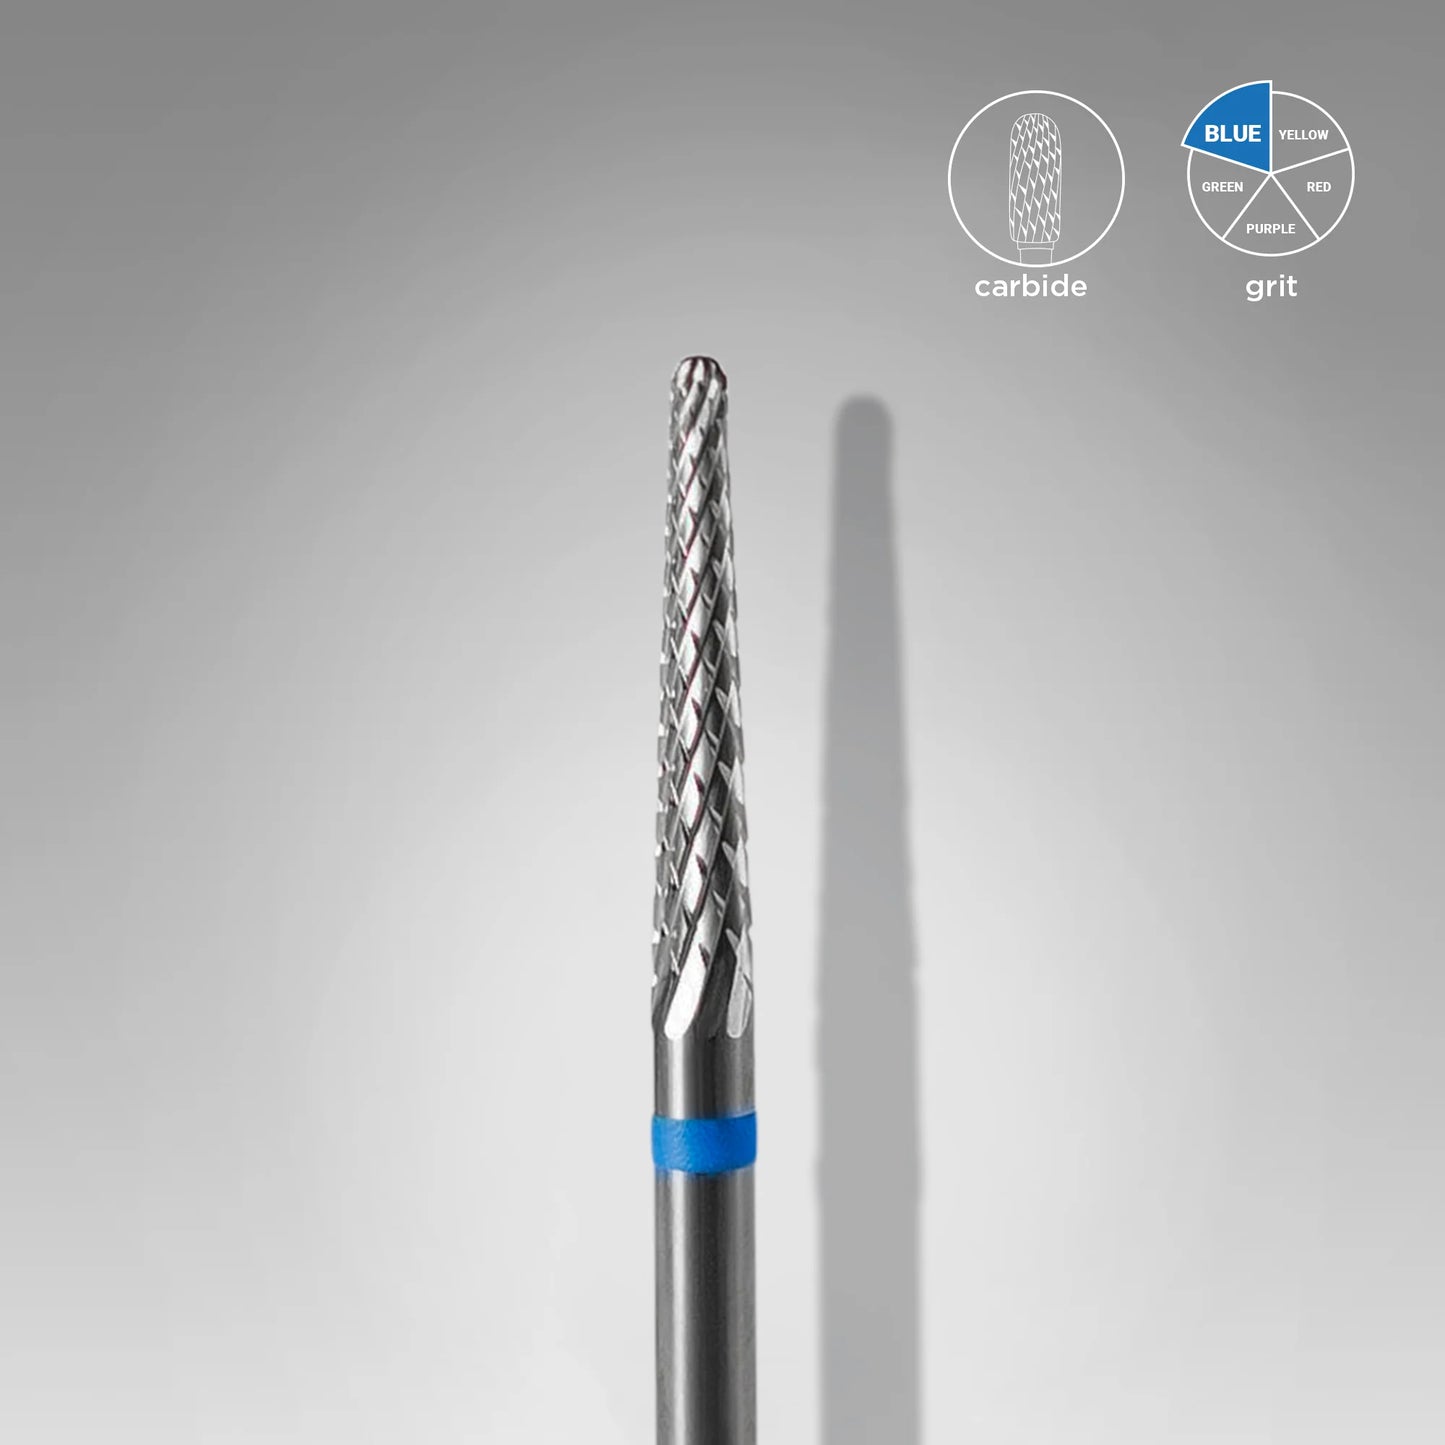 STALEKS Carbide Nail Drill Bit, "Cone" Blue, Diameter 2.3 Mm / Working Part 14 Mm